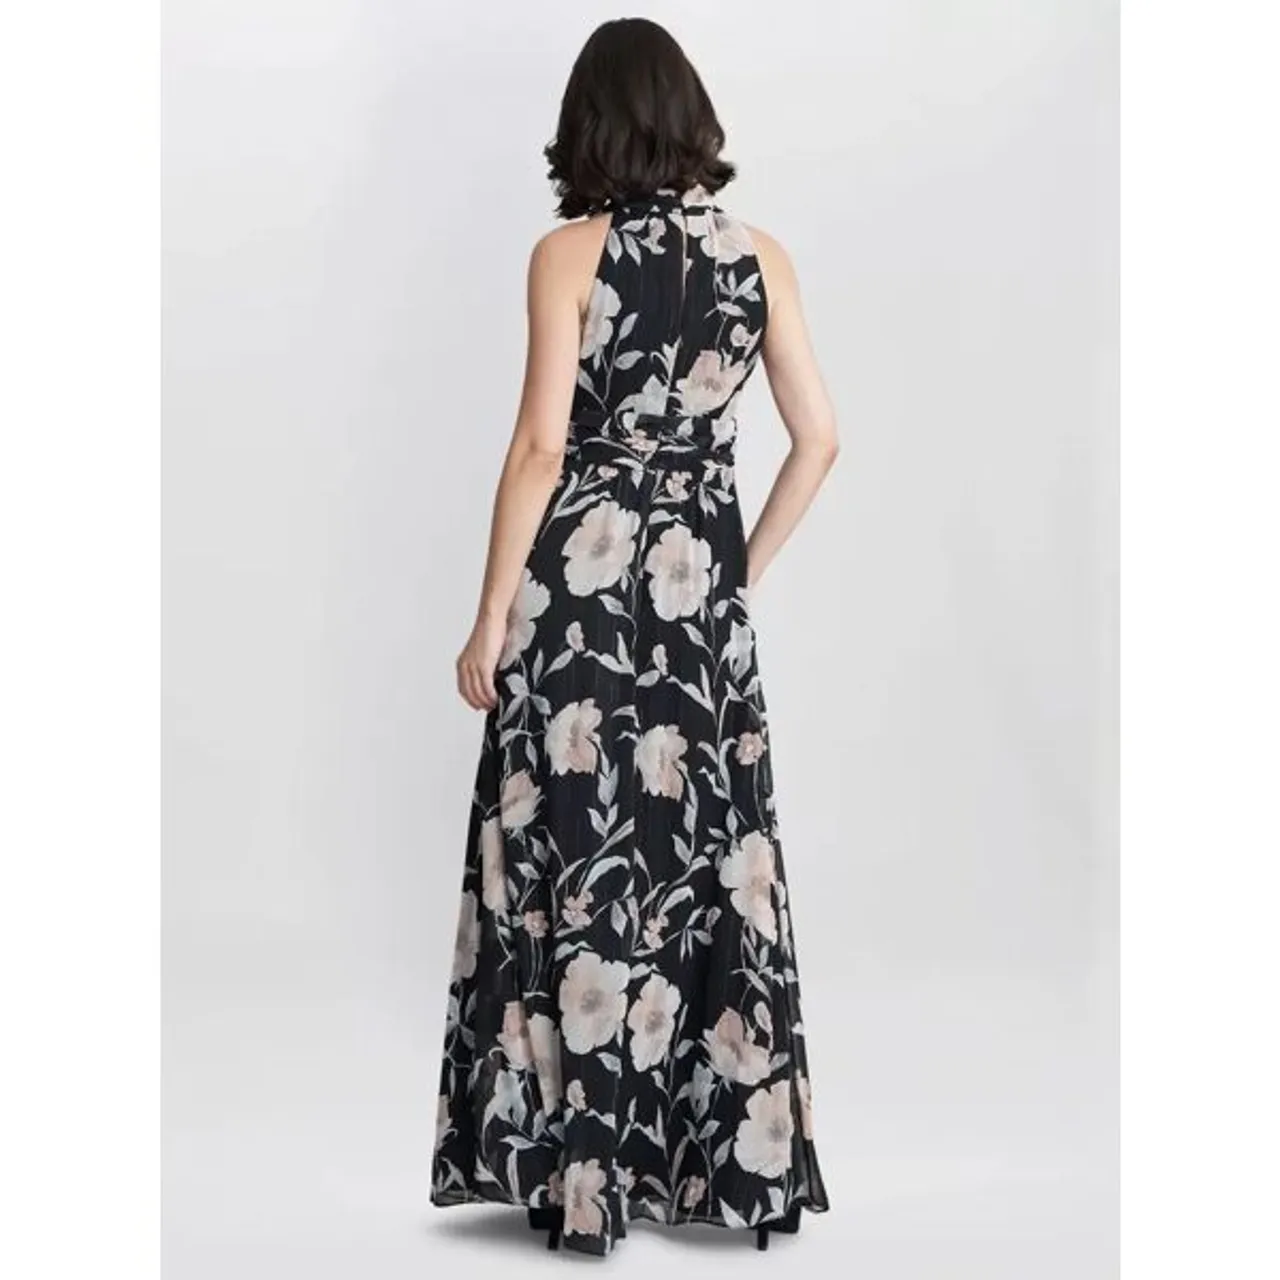 Gina Bacconi Lexi Floral Print Tie Neck Maxi Dress, Black/Multi - Black/Multi - Female